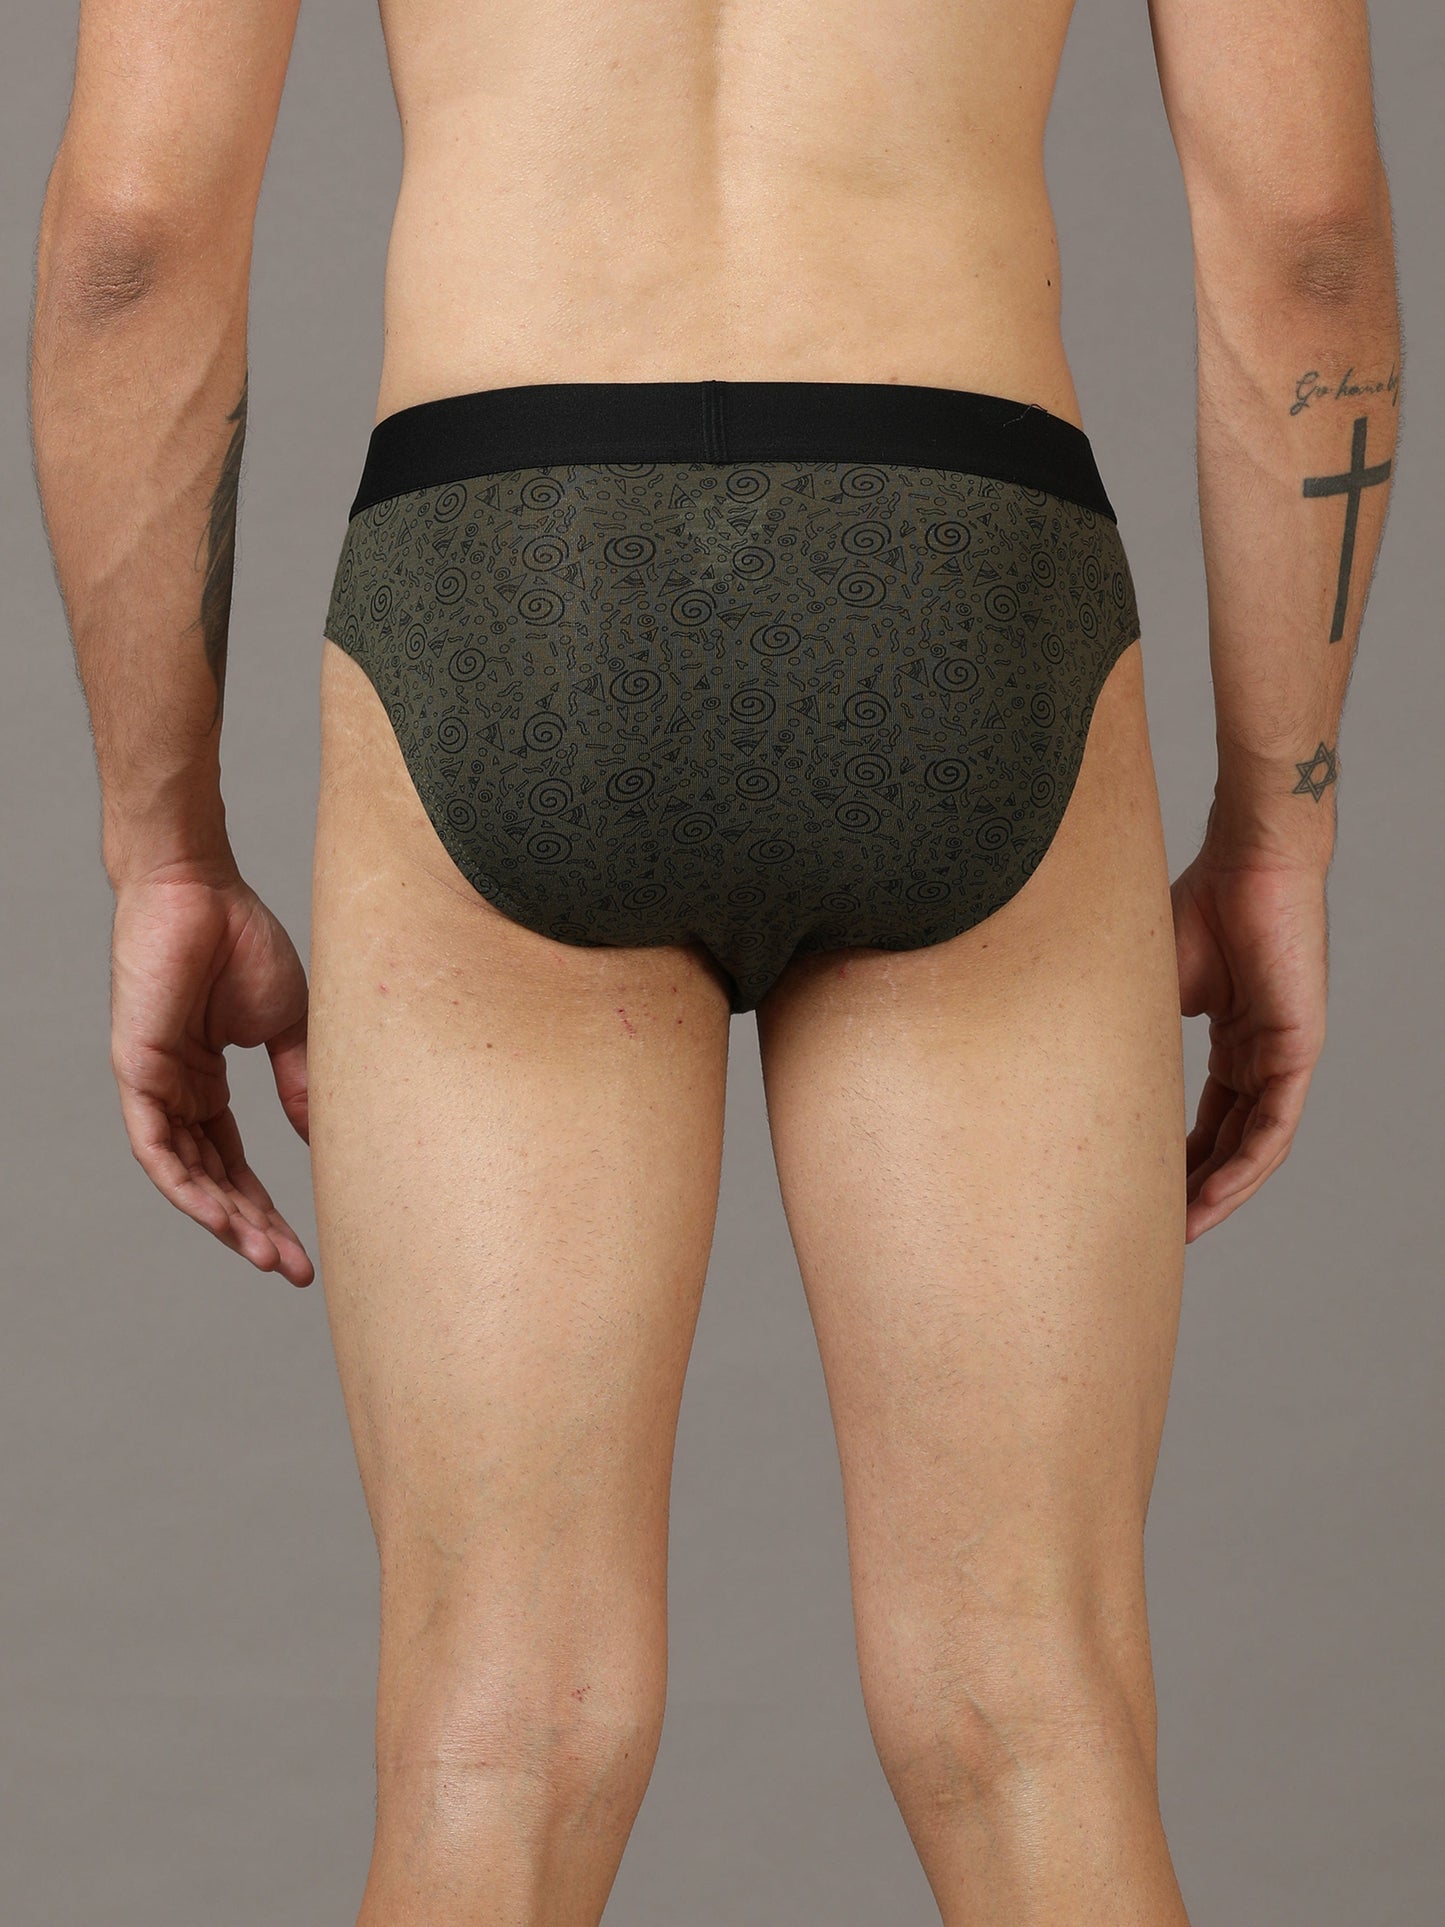 Breathable Underwear for Men